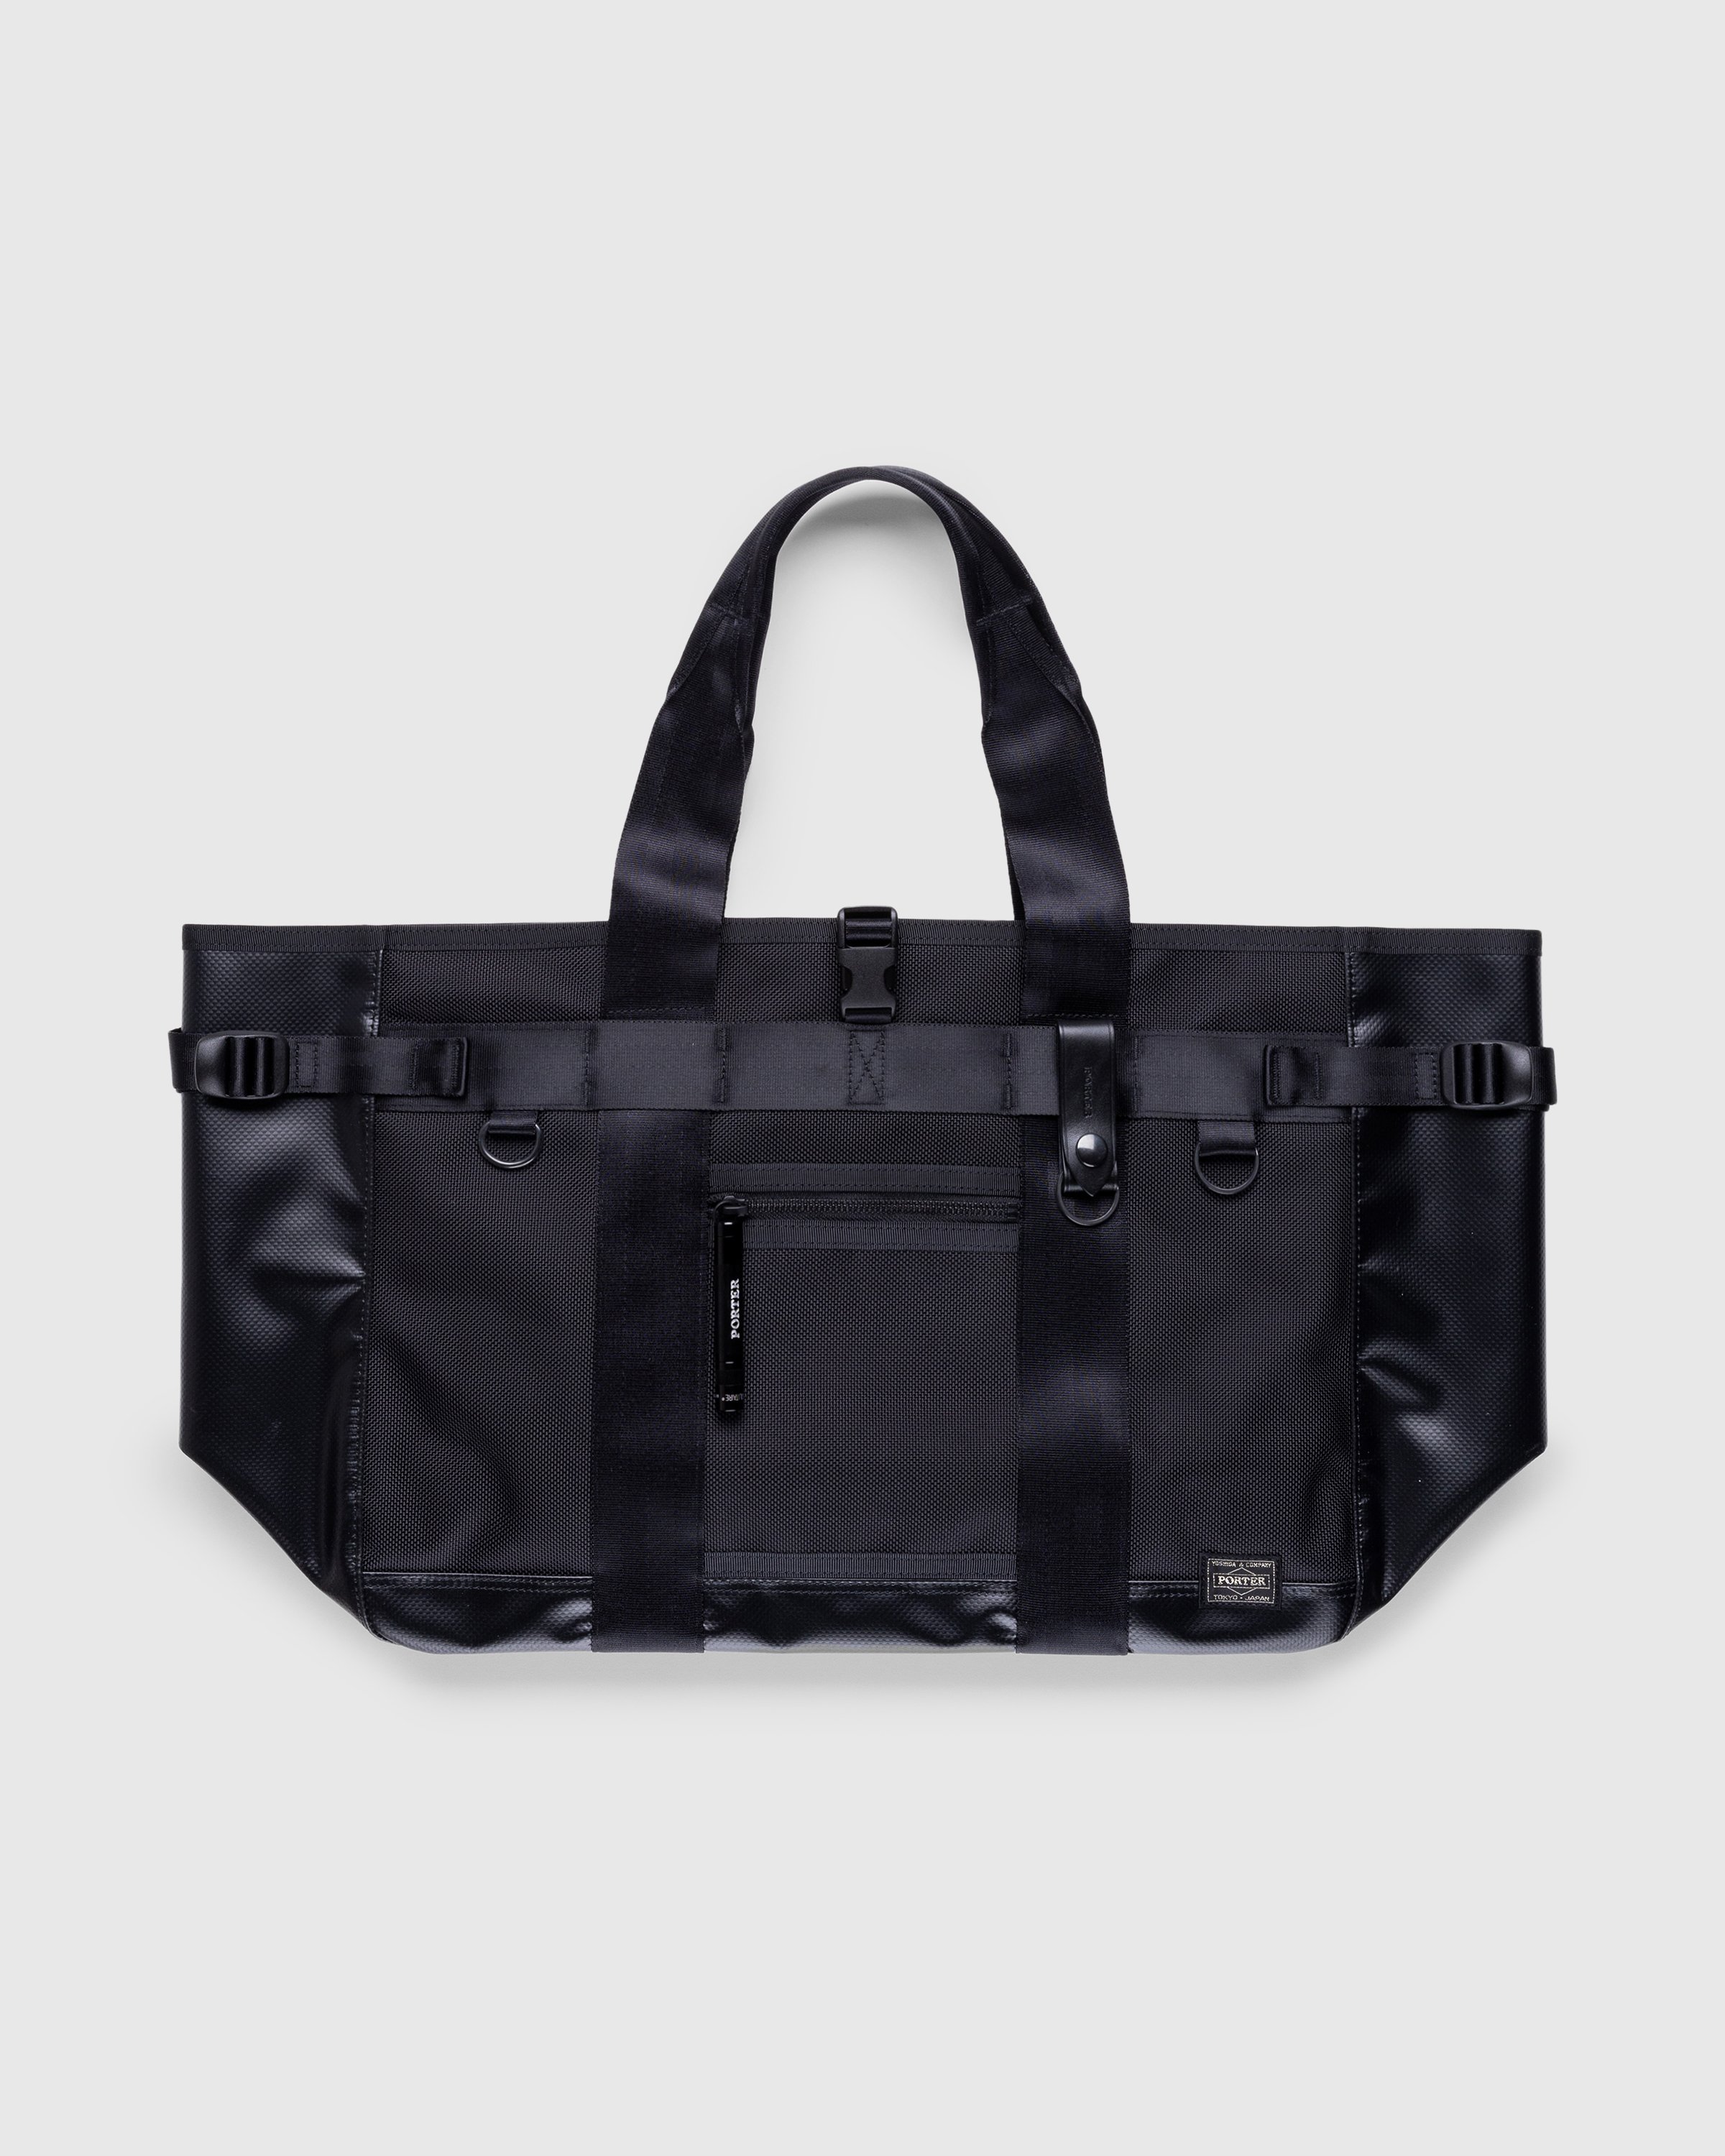 Porter-Yoshida & Co. – Heat Tote Bag Black | Highsnobiety Shop